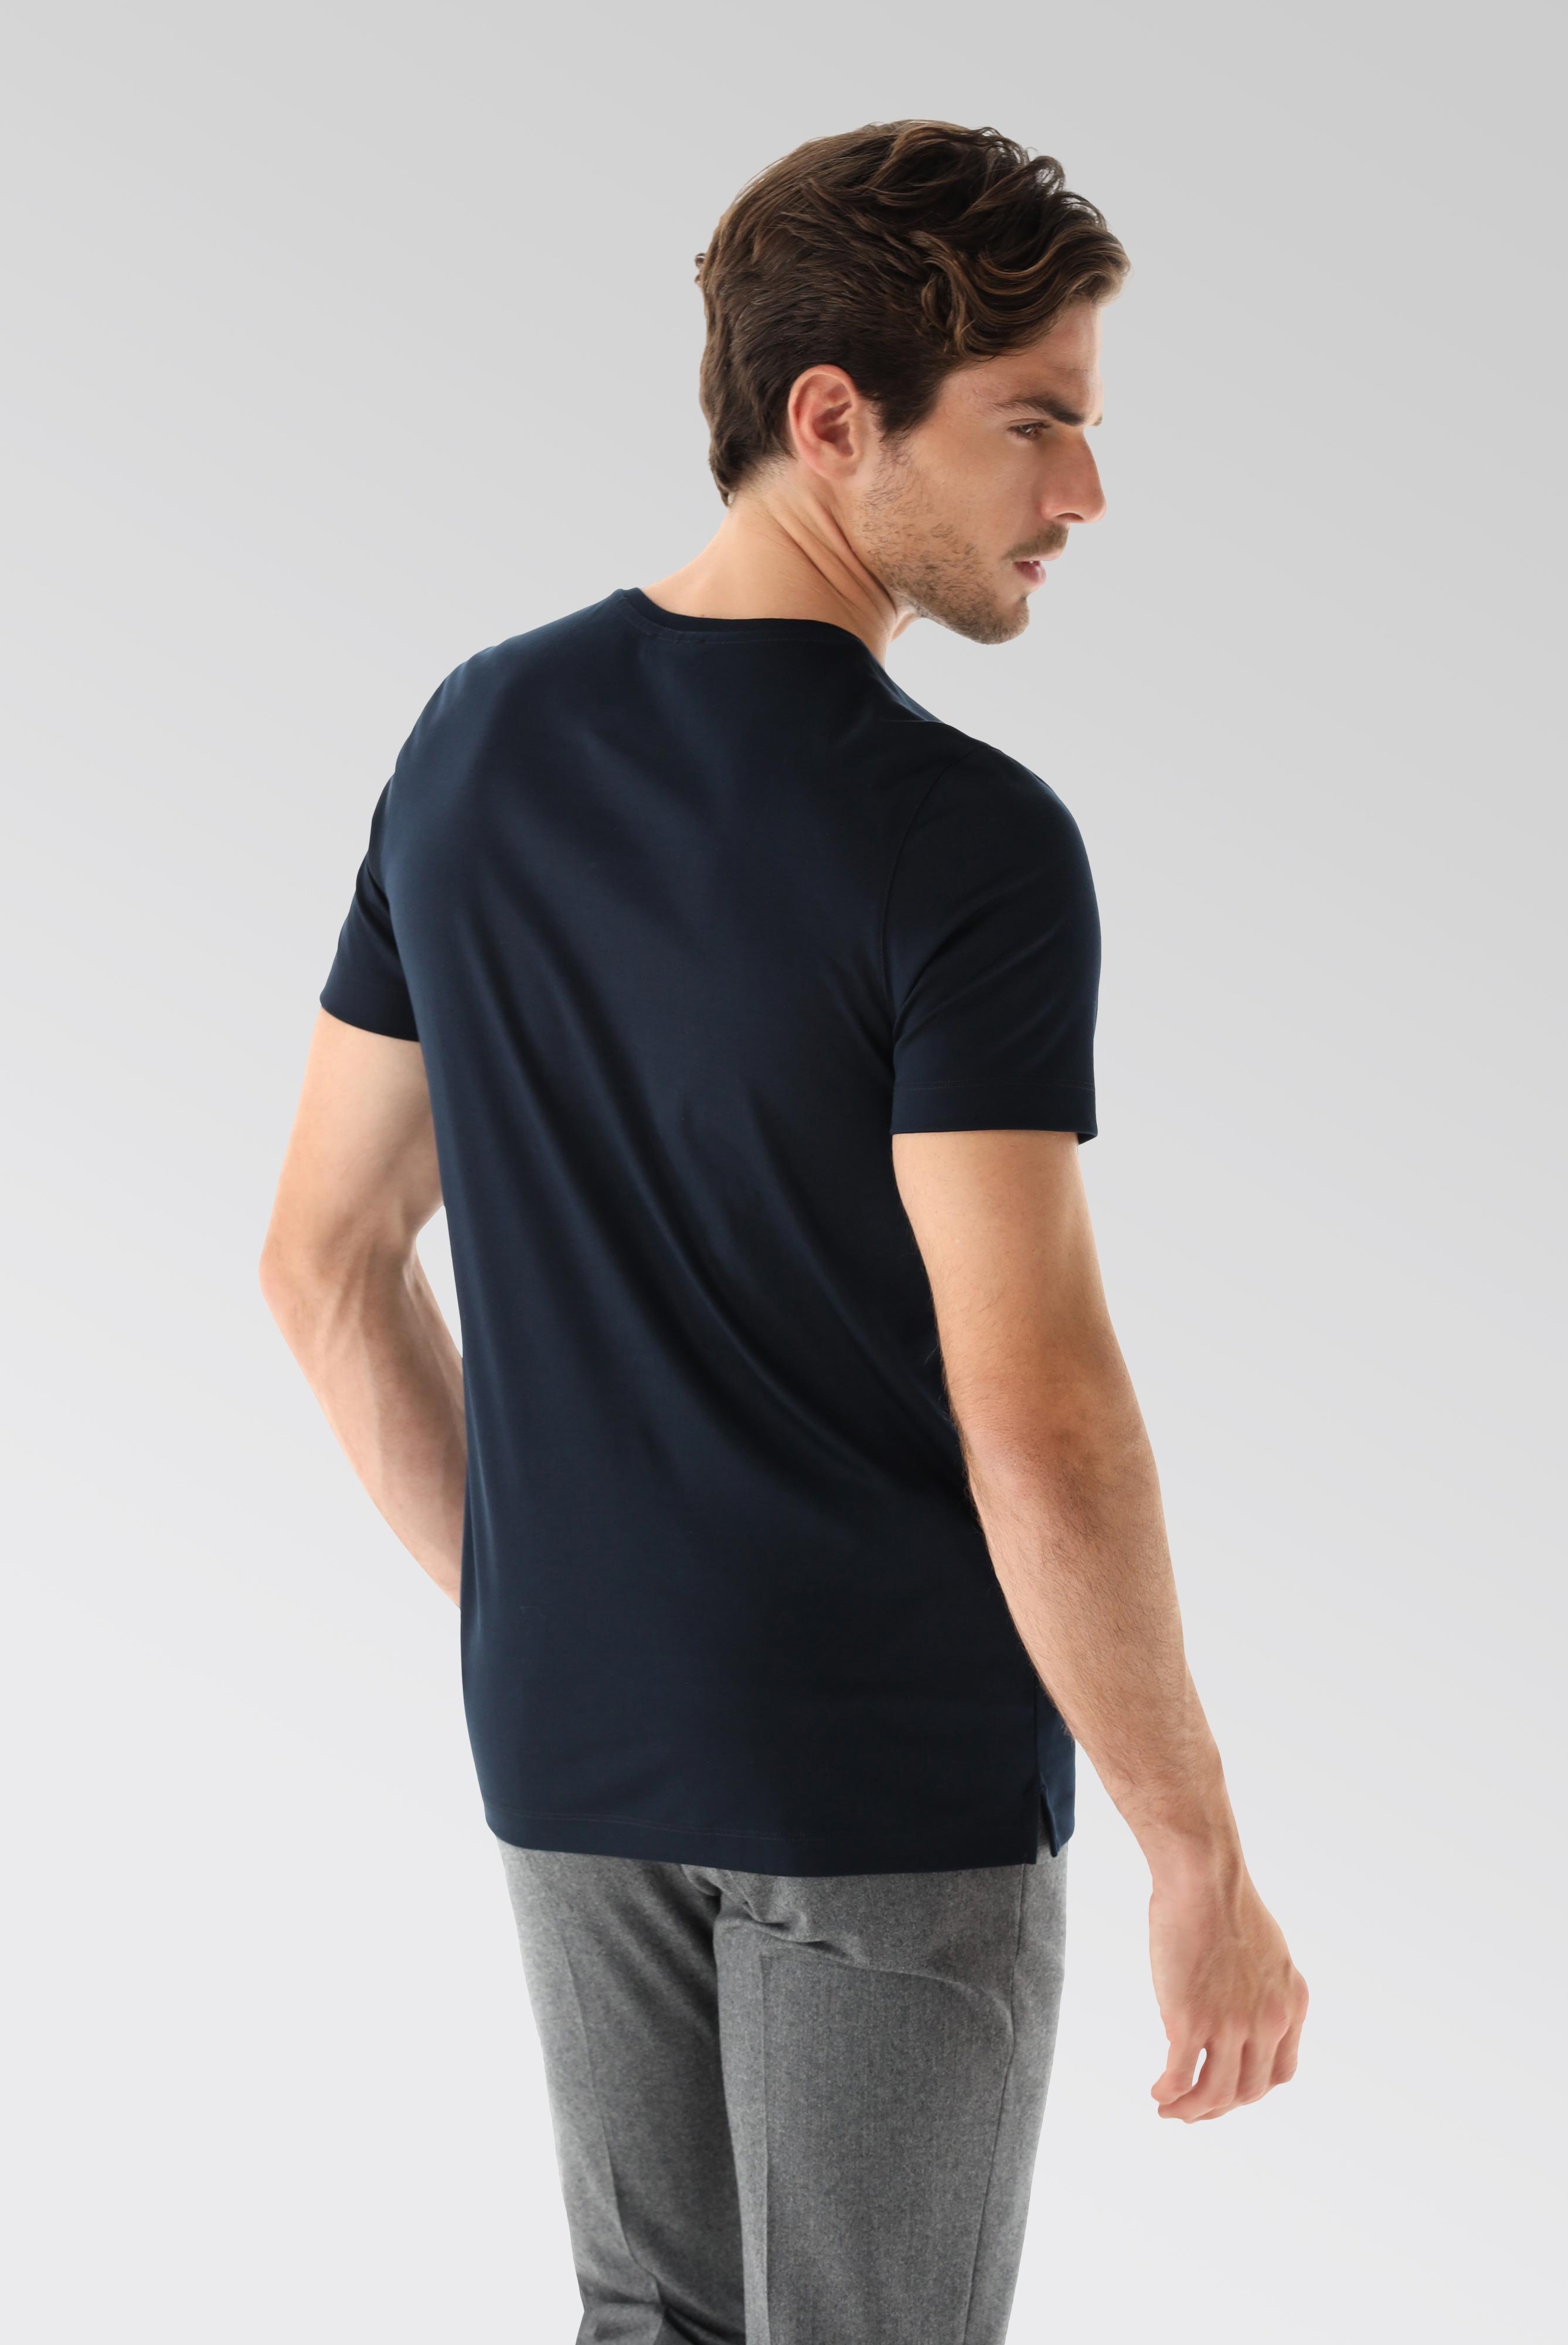 T-Shirts+Swiss Cotton Jersey V-Neck T-Shirt+20.1715.UX.180031.790.M